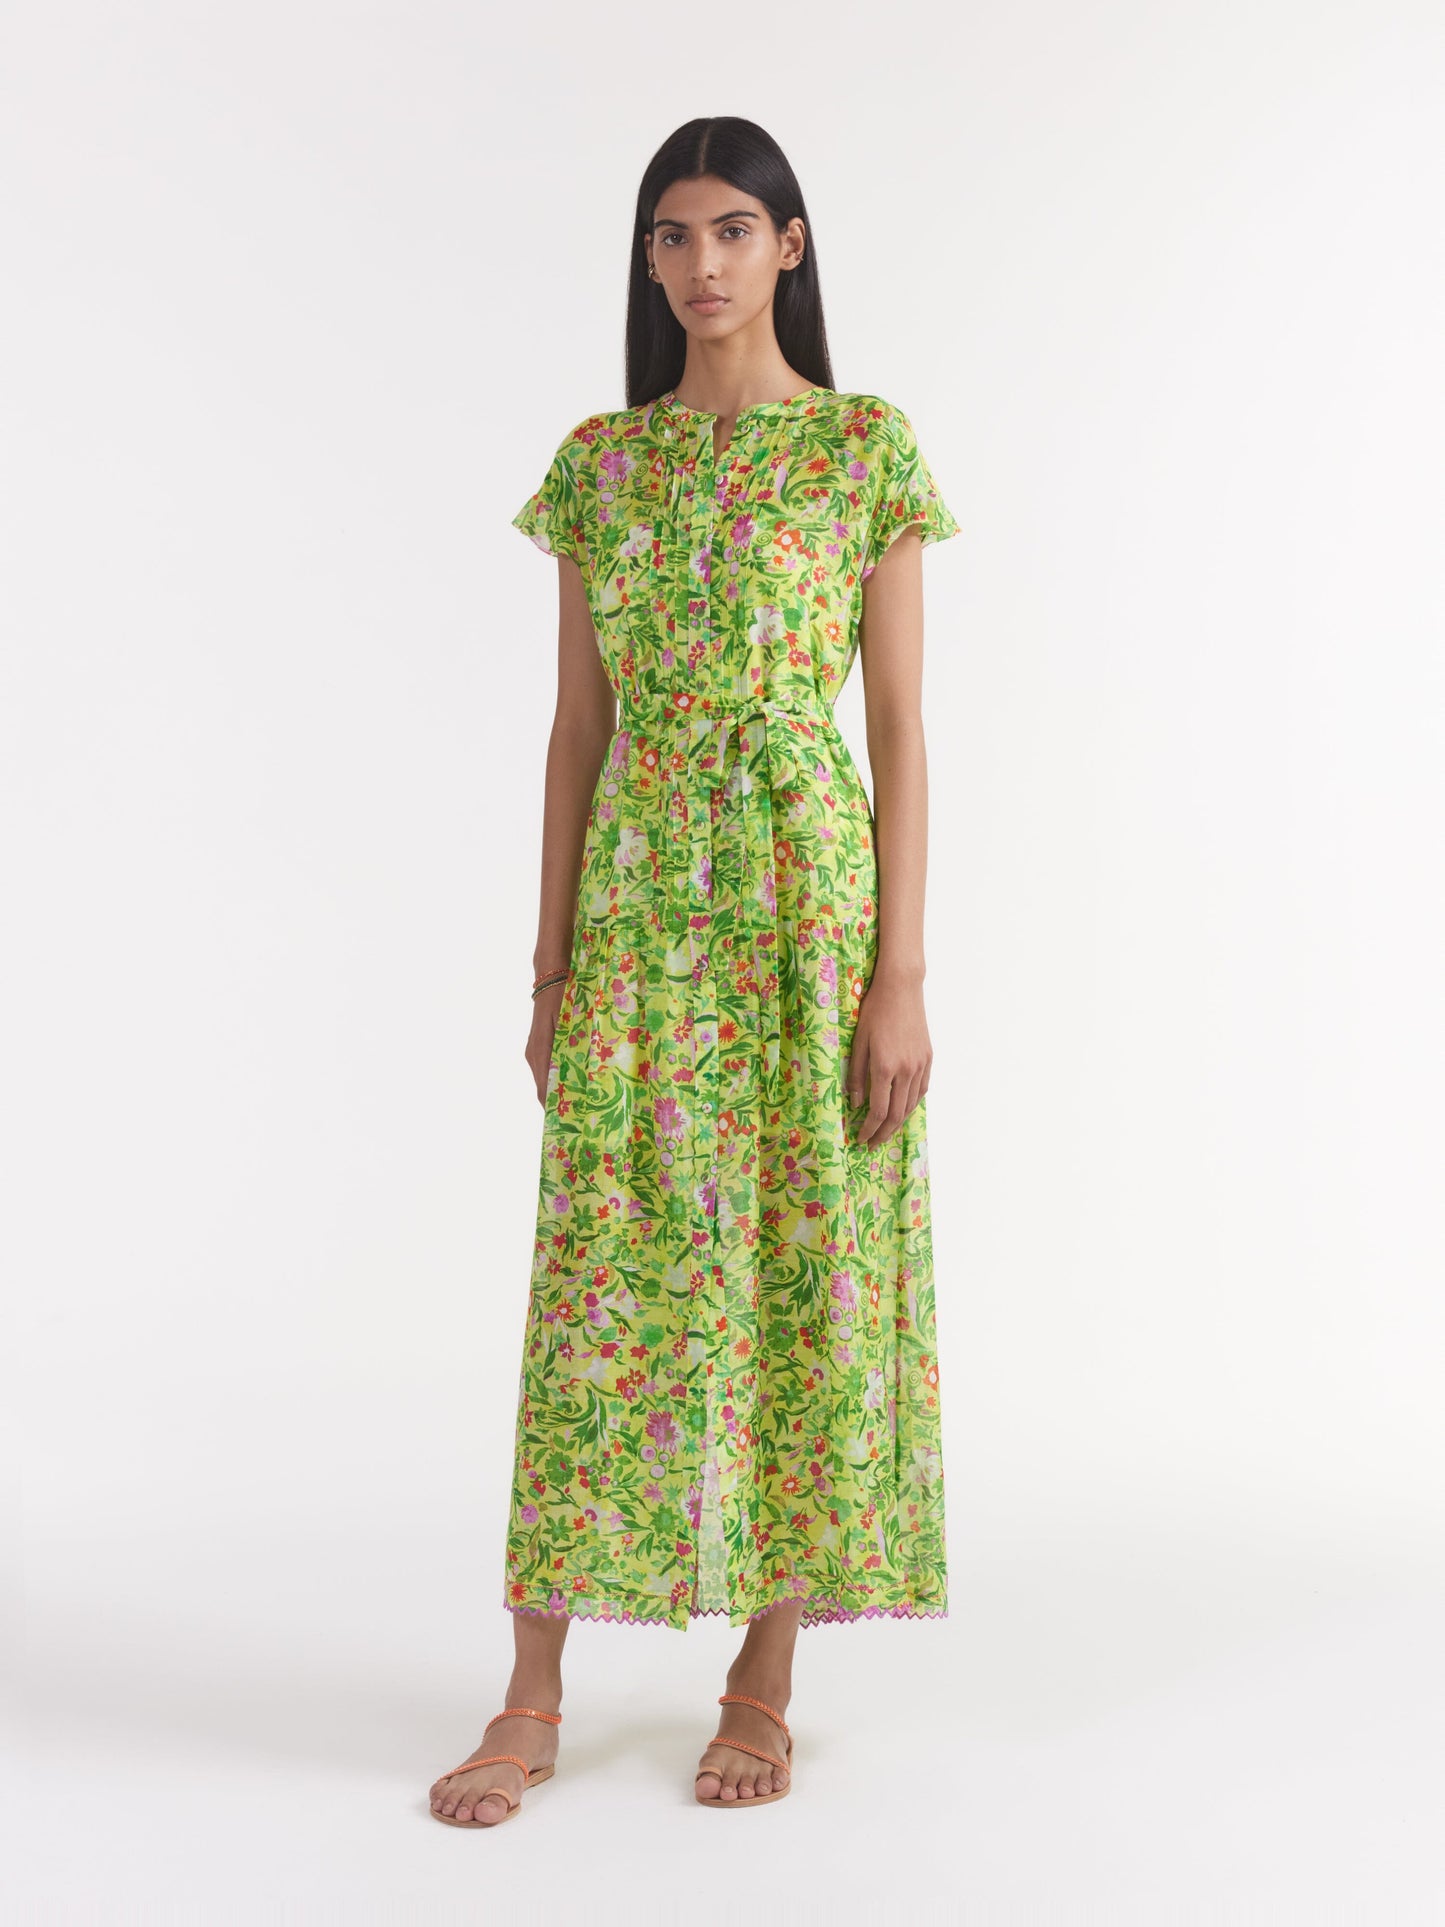 Saloni - Bettie B Dress in Bouquet Lime Embroidery